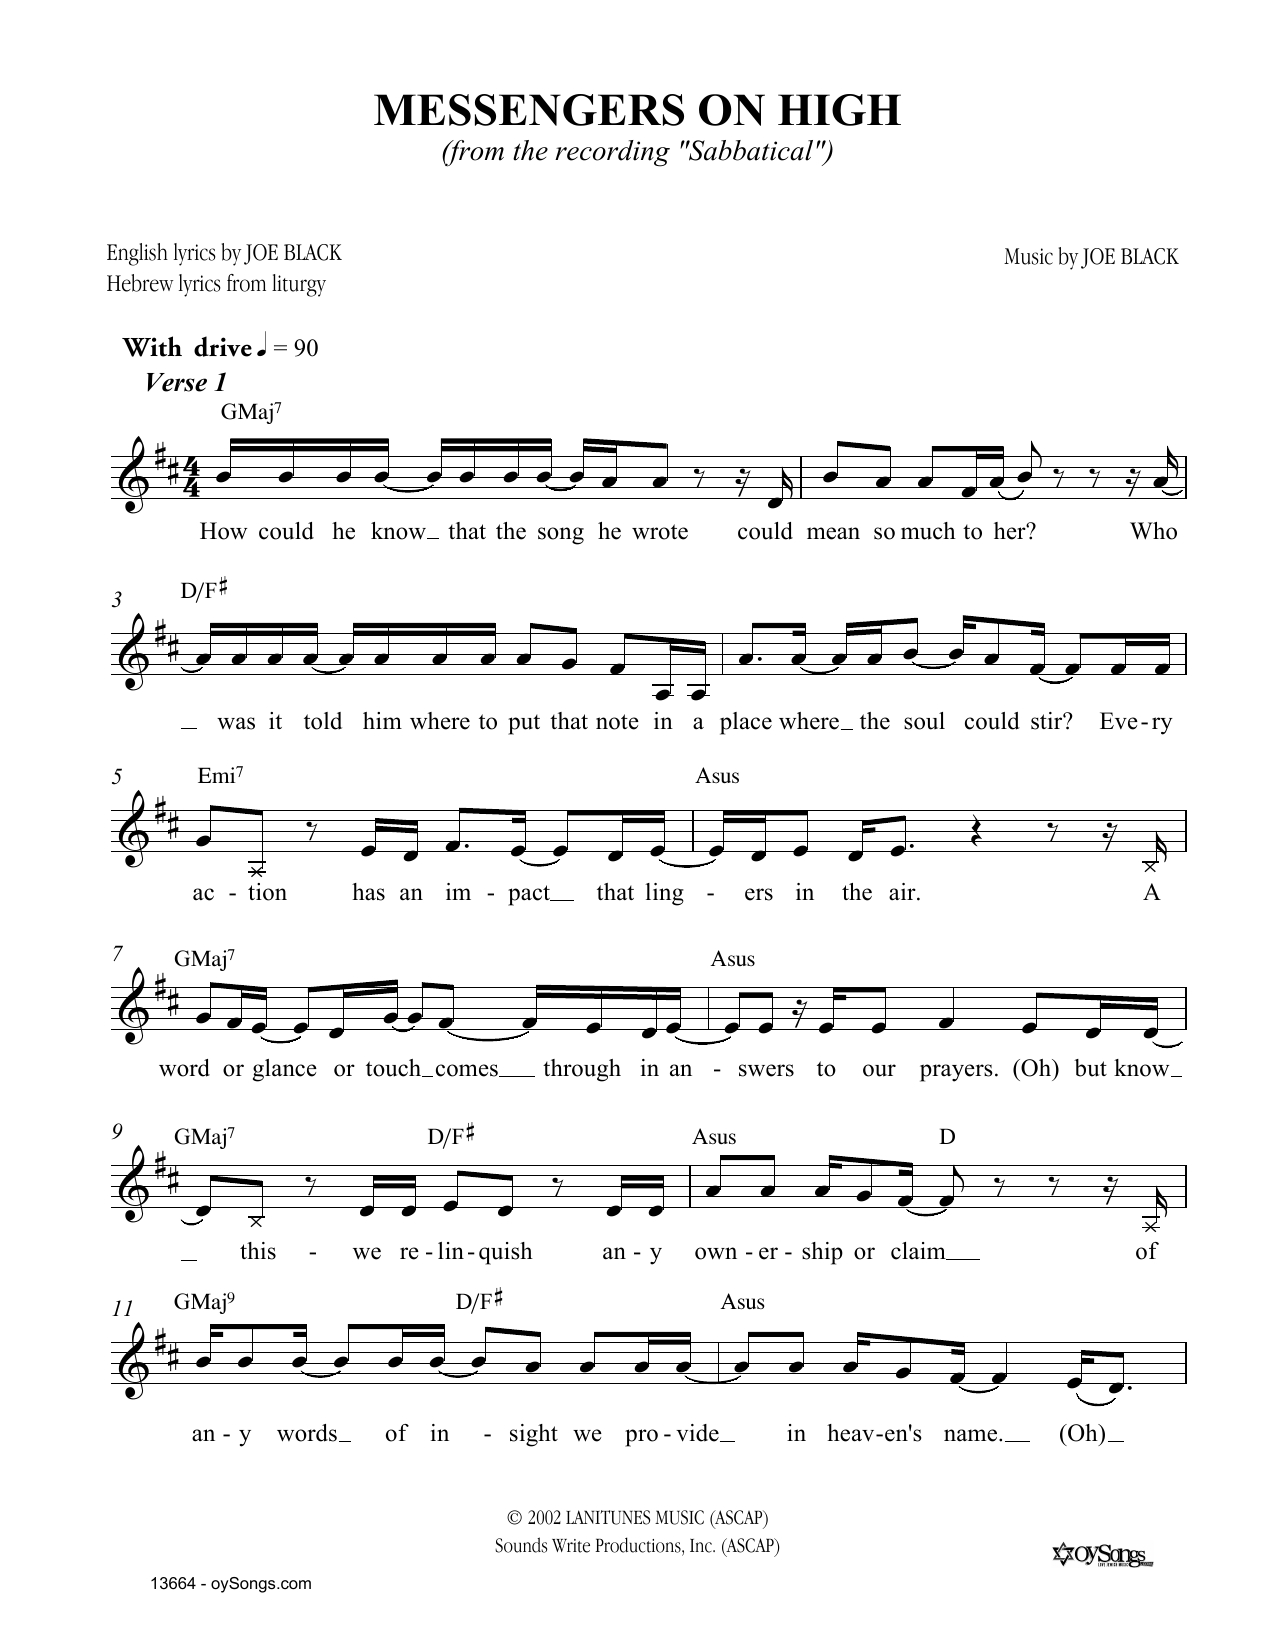 Joe Black Messengers on High Sheet Music Notes & Chords for Melody Line, Lyrics & Chords - Download or Print PDF